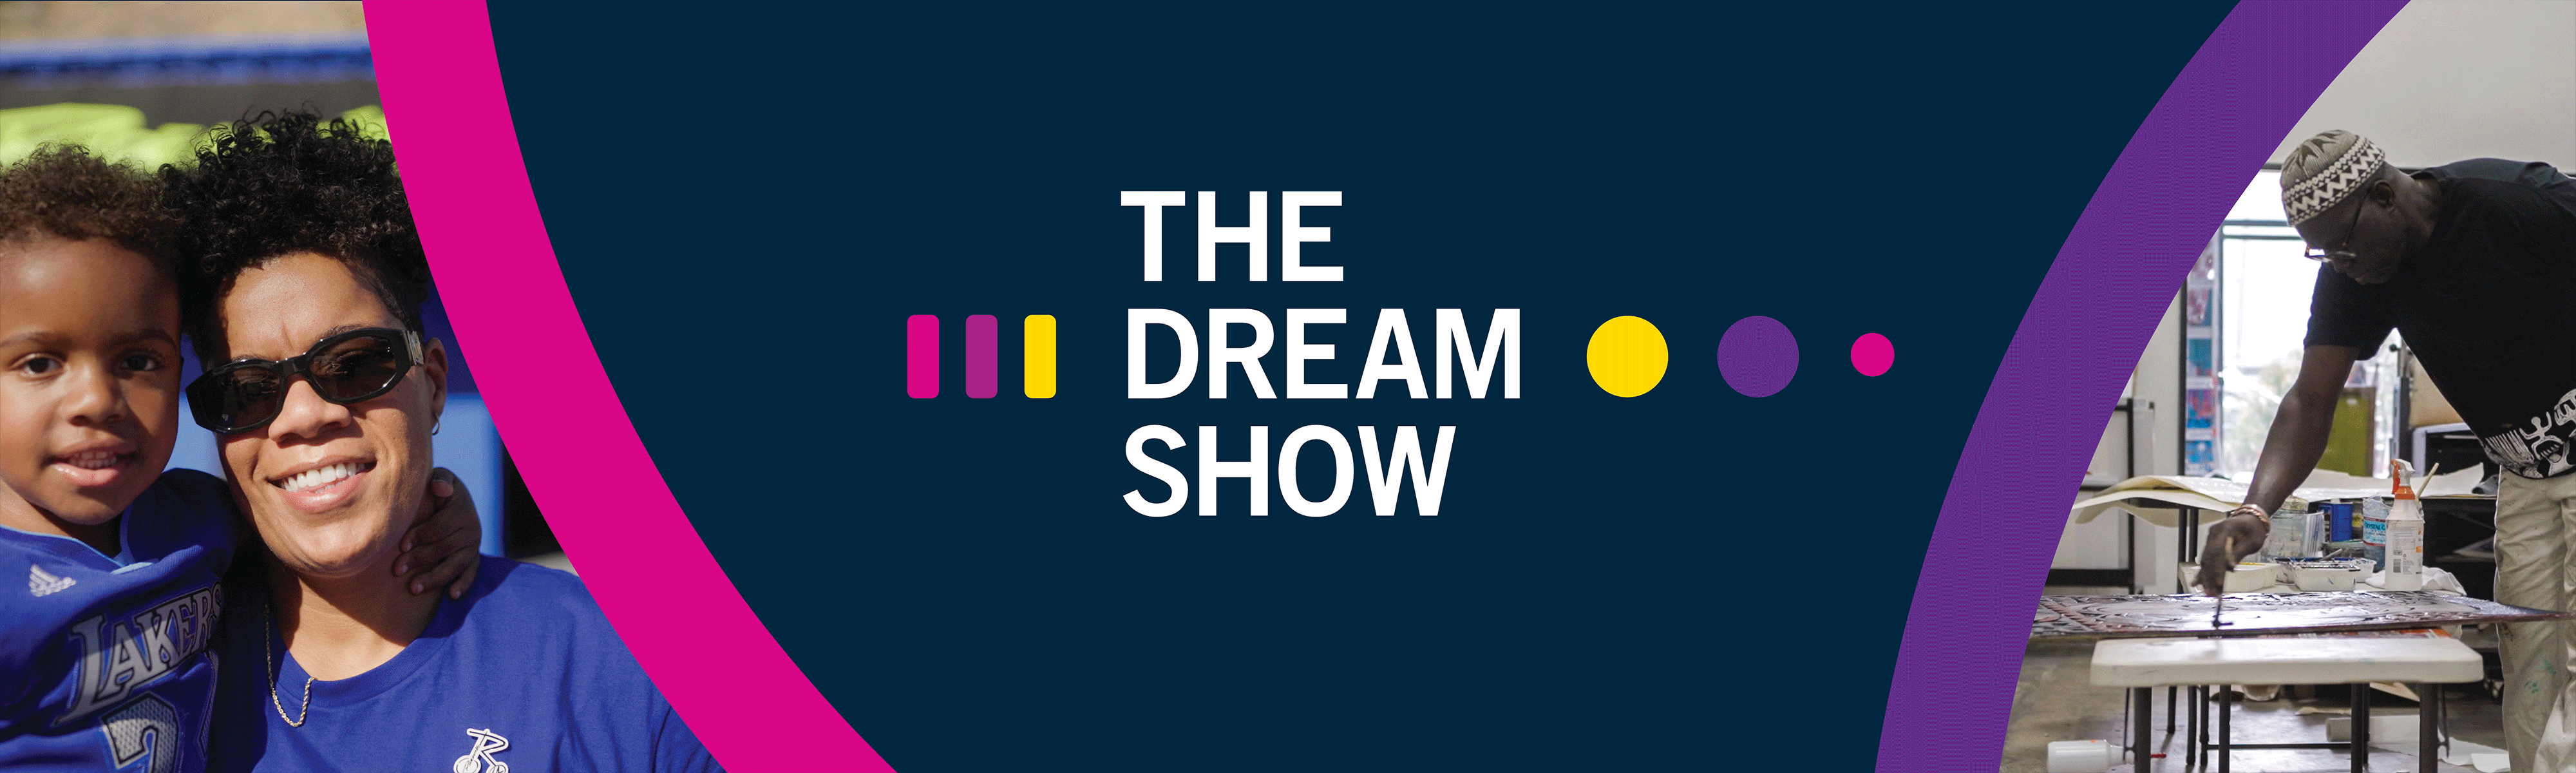 The Dream Show Highlight Banner